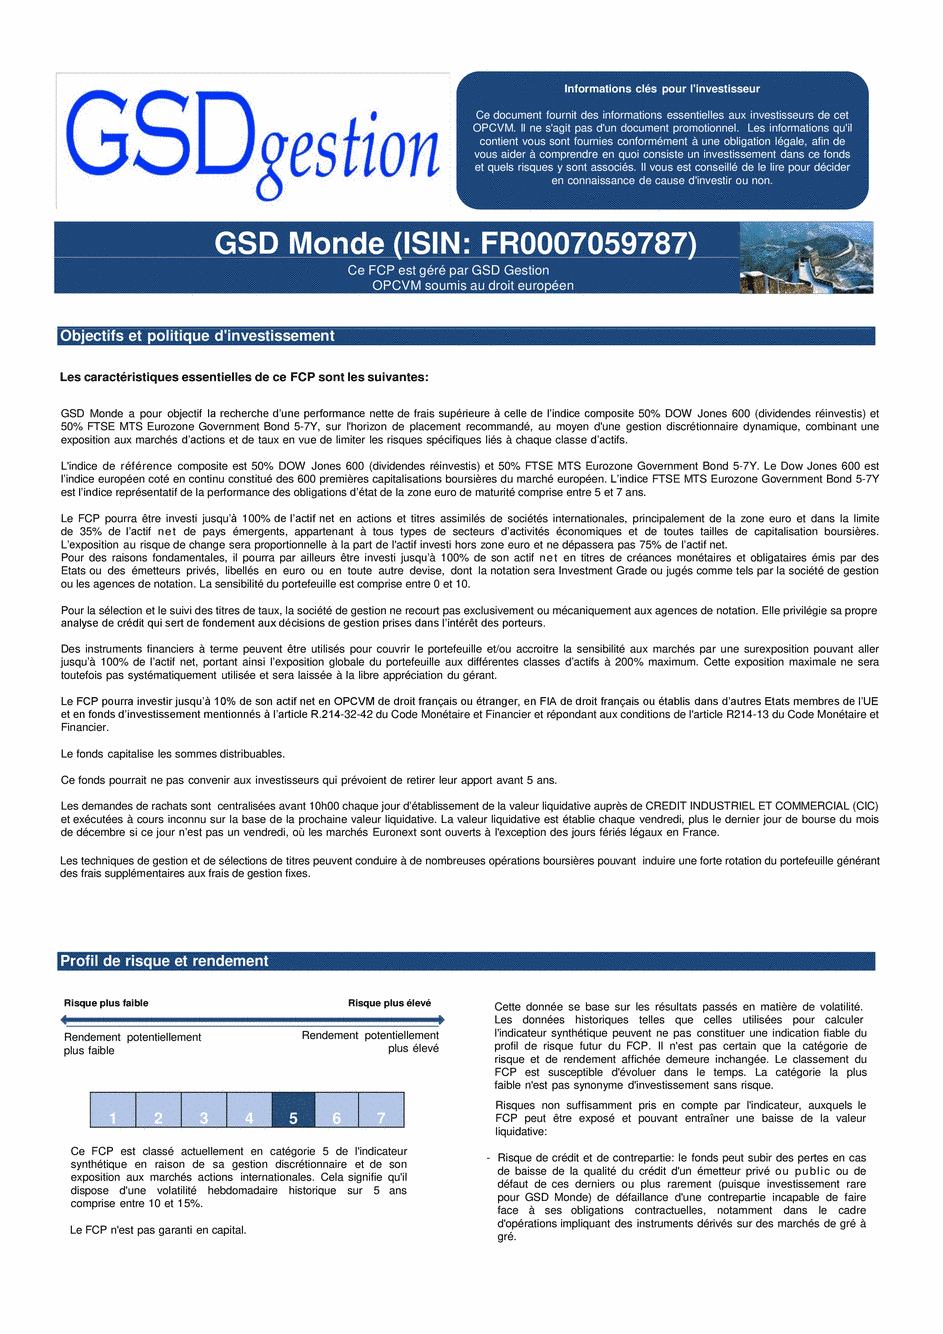 DICI-Prospectus GSD Monde - 16/01/2019 - Français